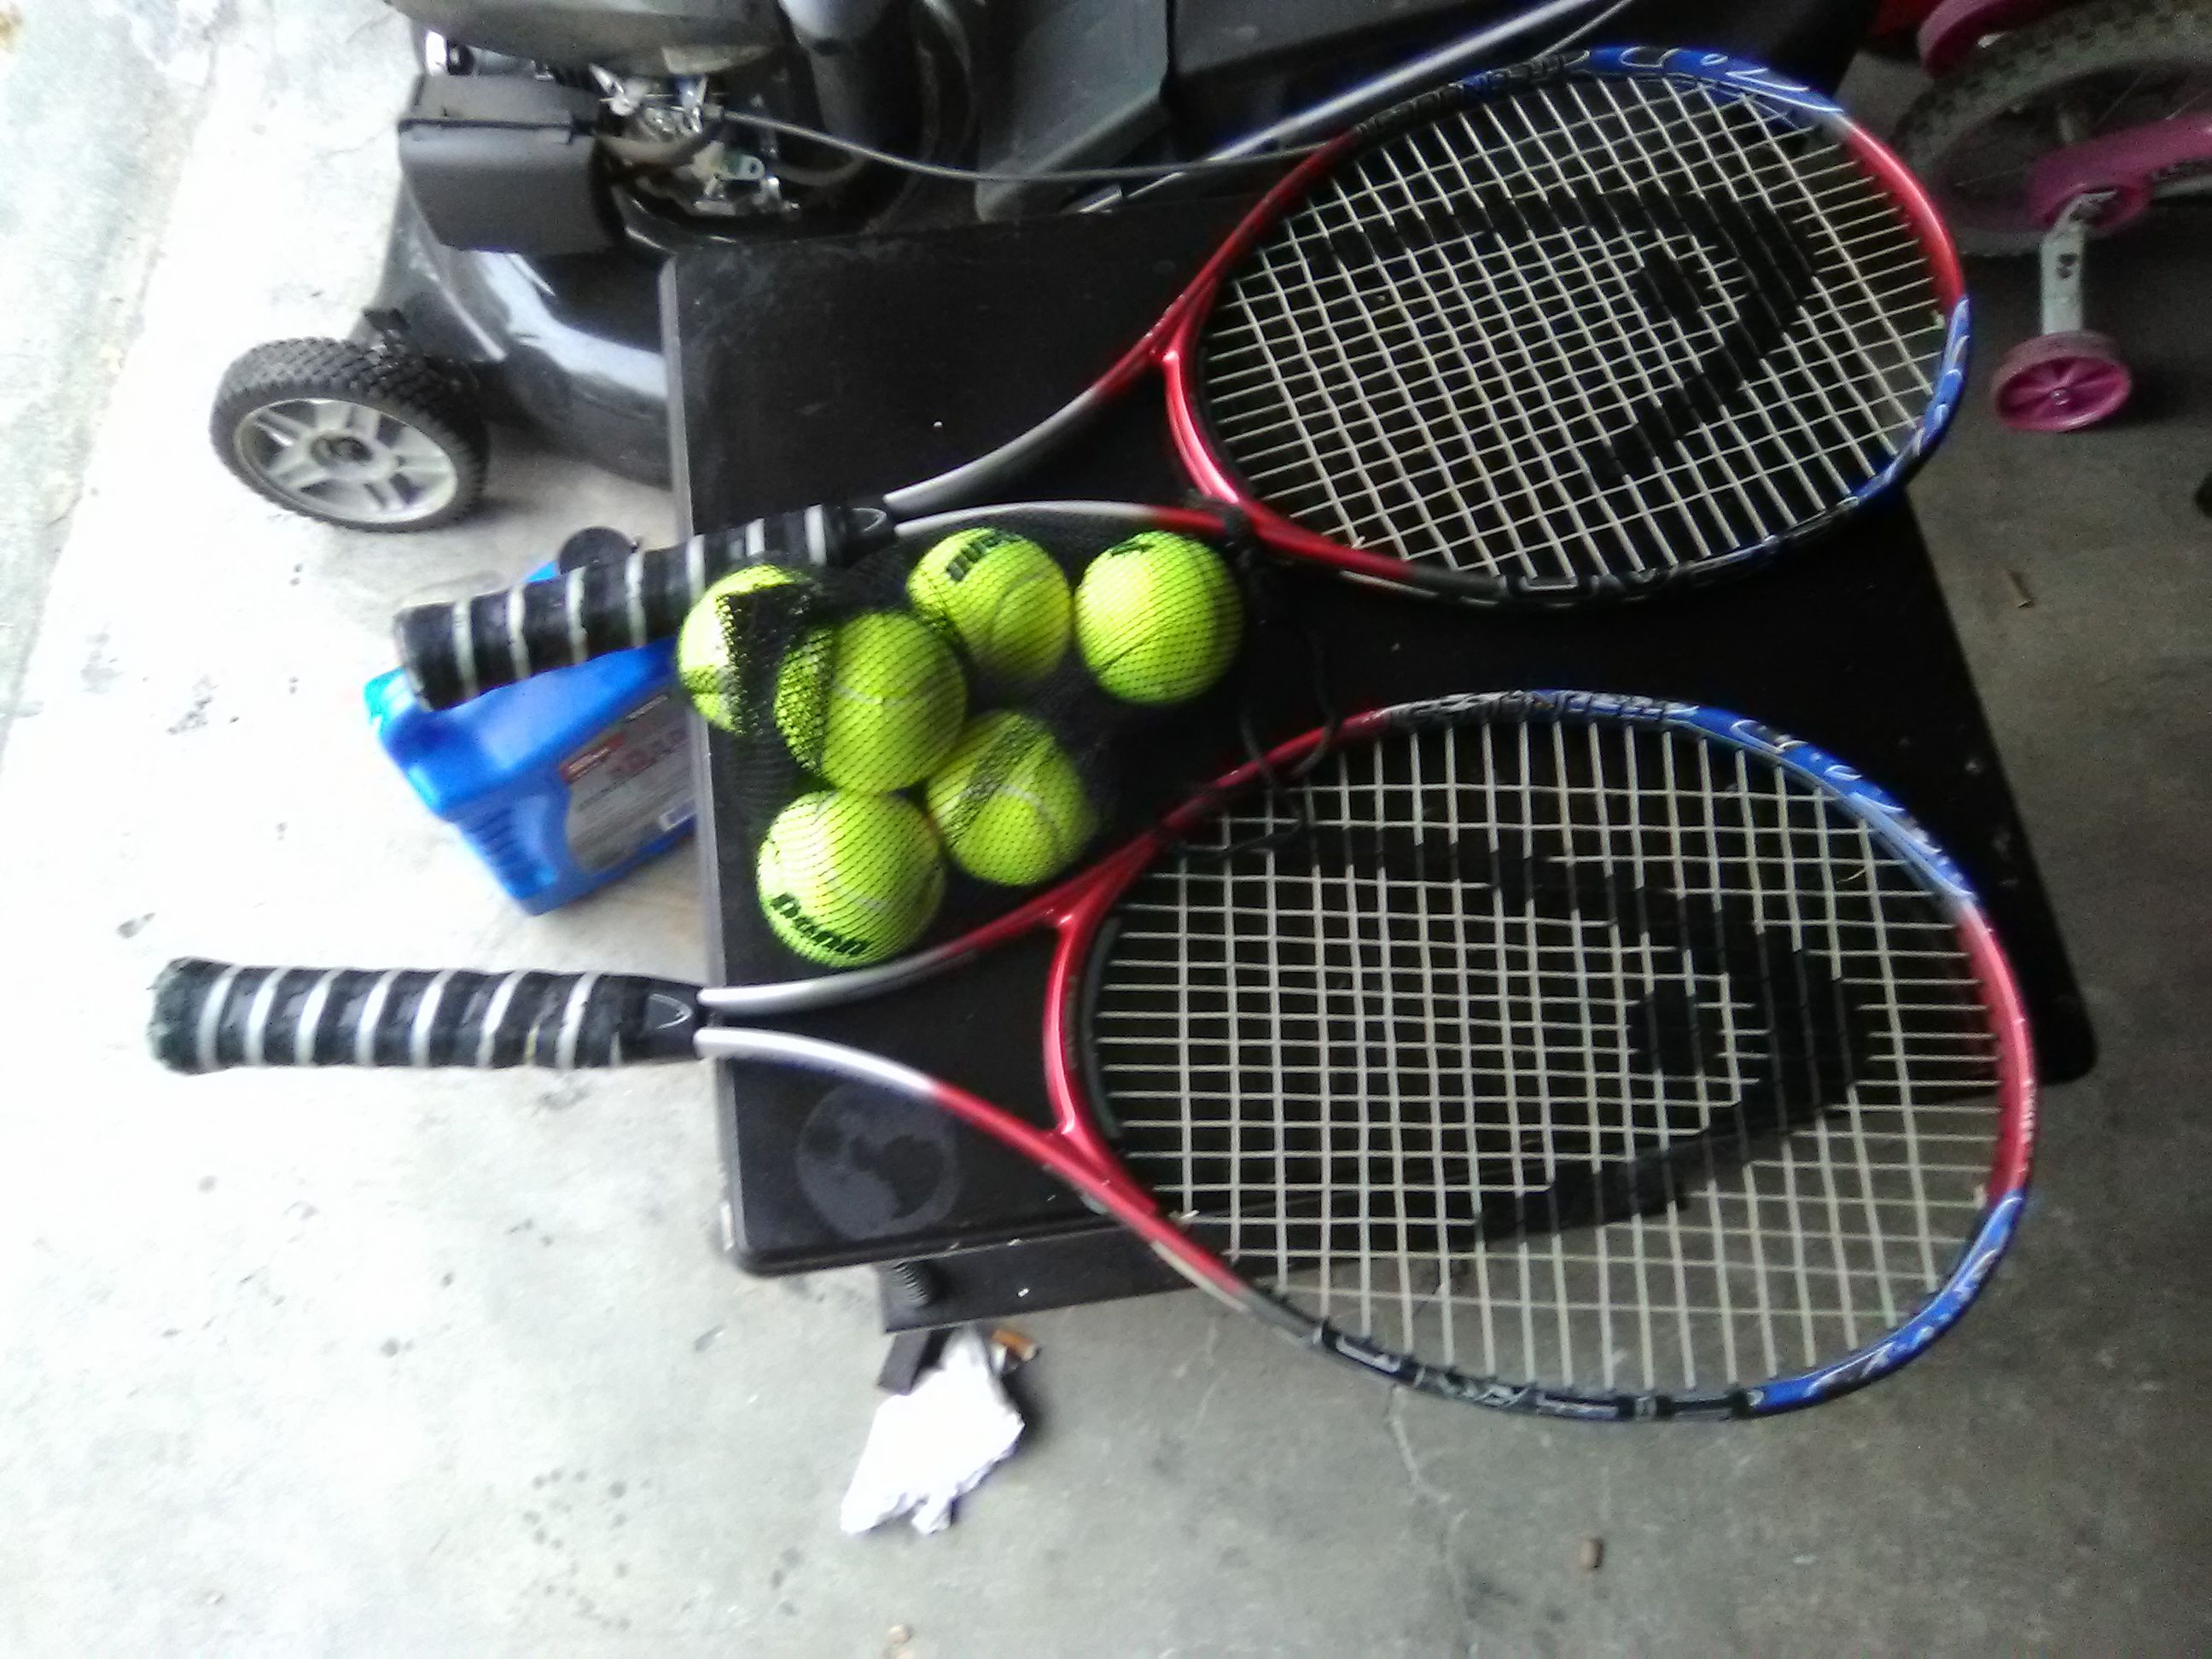 2 Ti Conquest Tennis Rackets